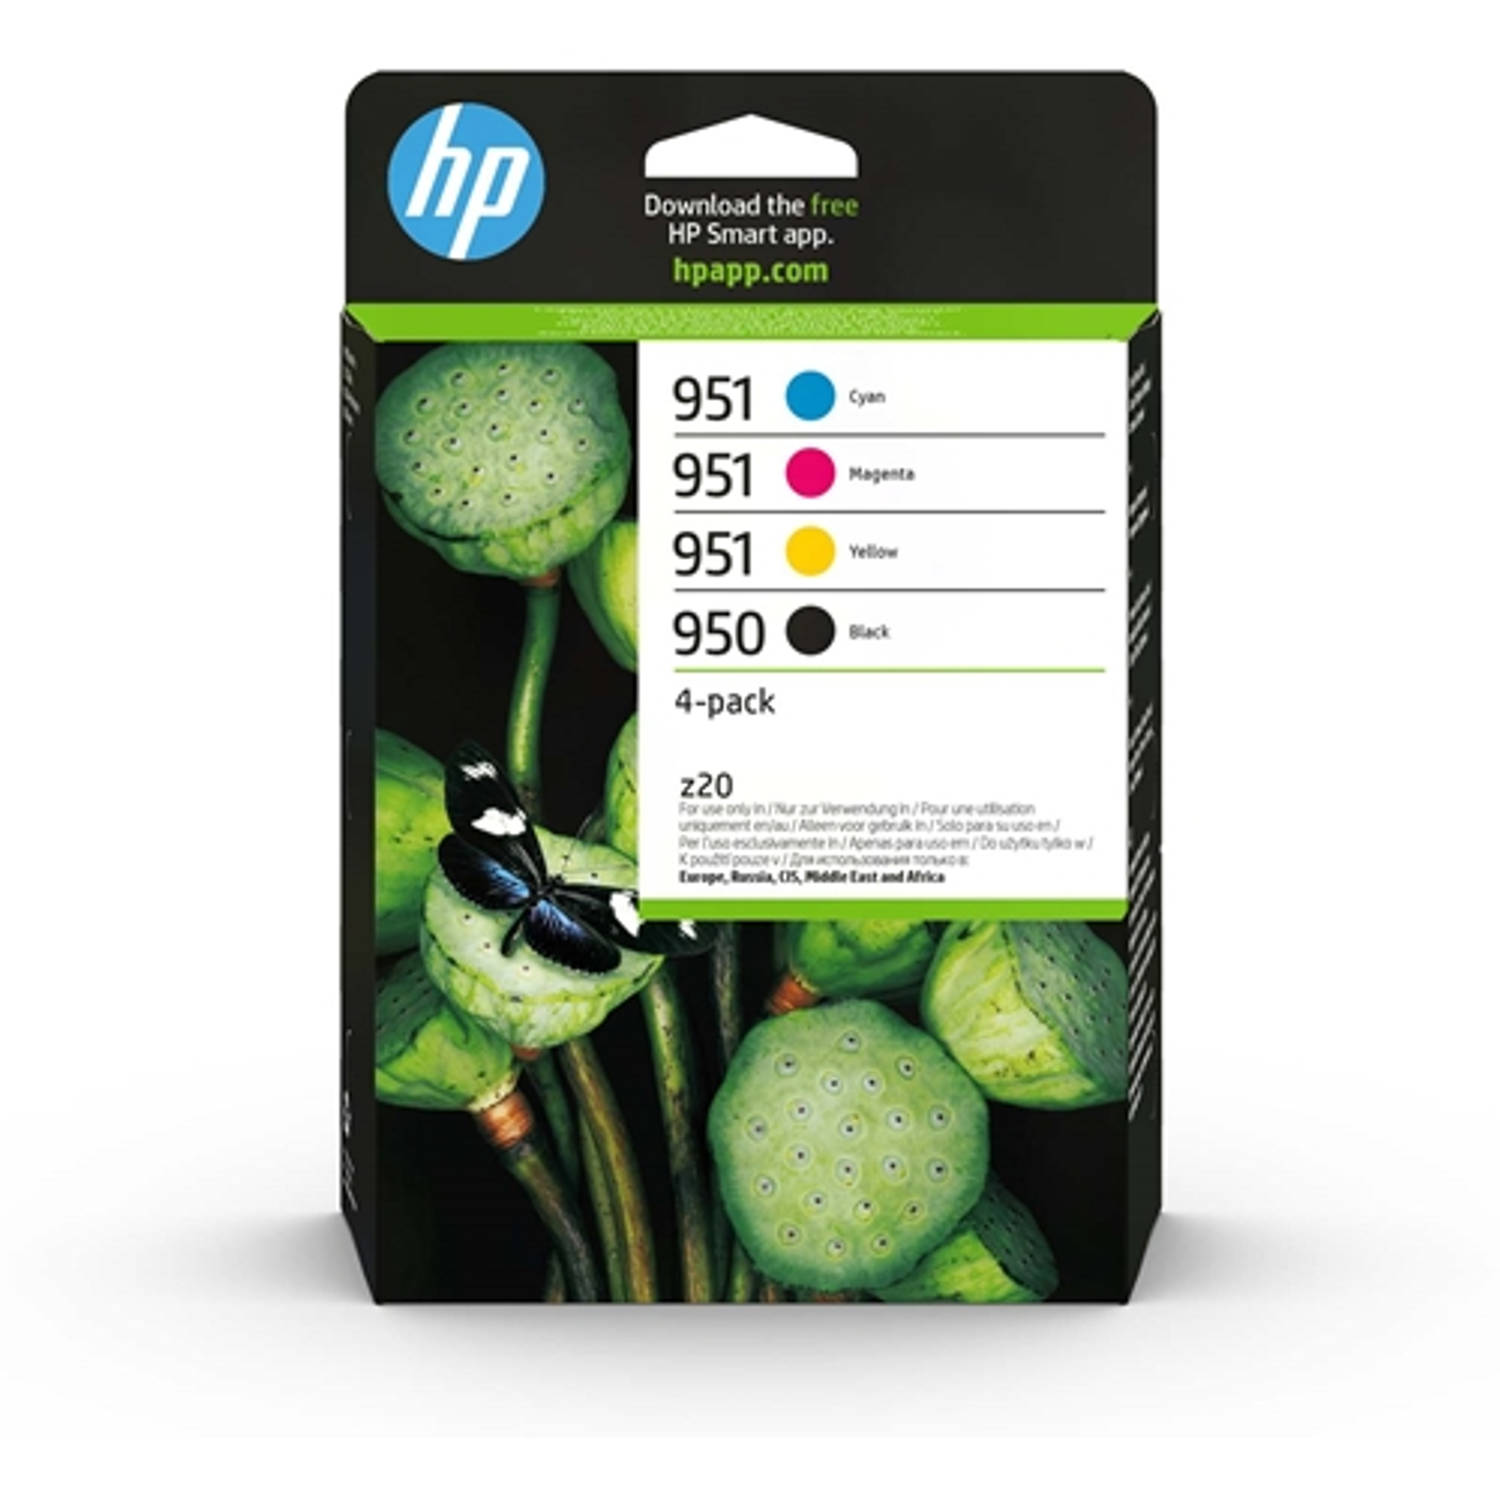 HP cartridge HP 950/951 BK3CL - Instant Ink